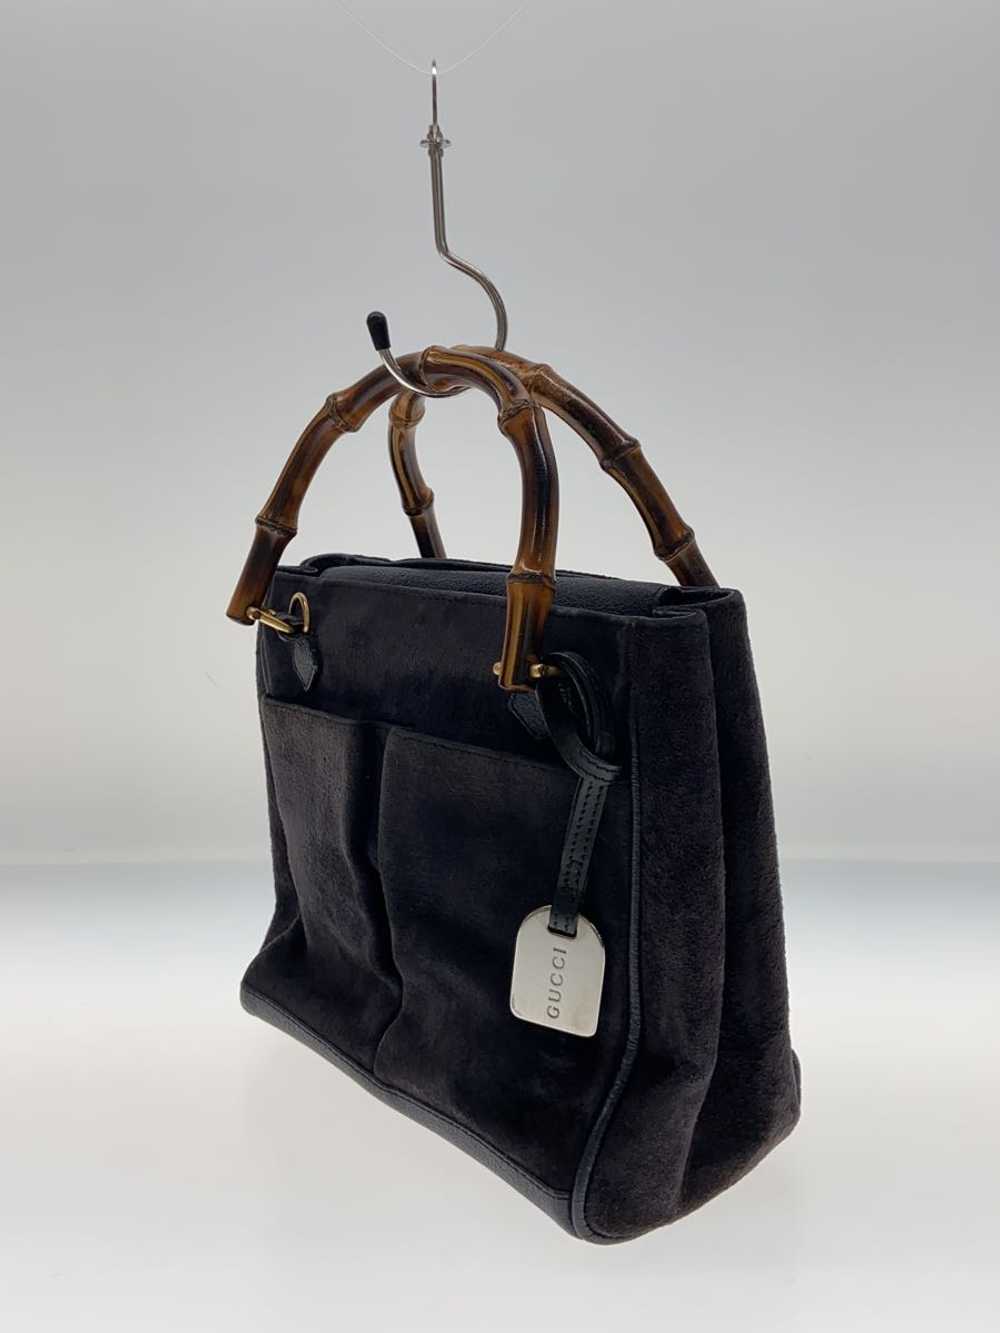 Used Gucci Handbag/Suede/Nvy/Bamboo Bag - image 2